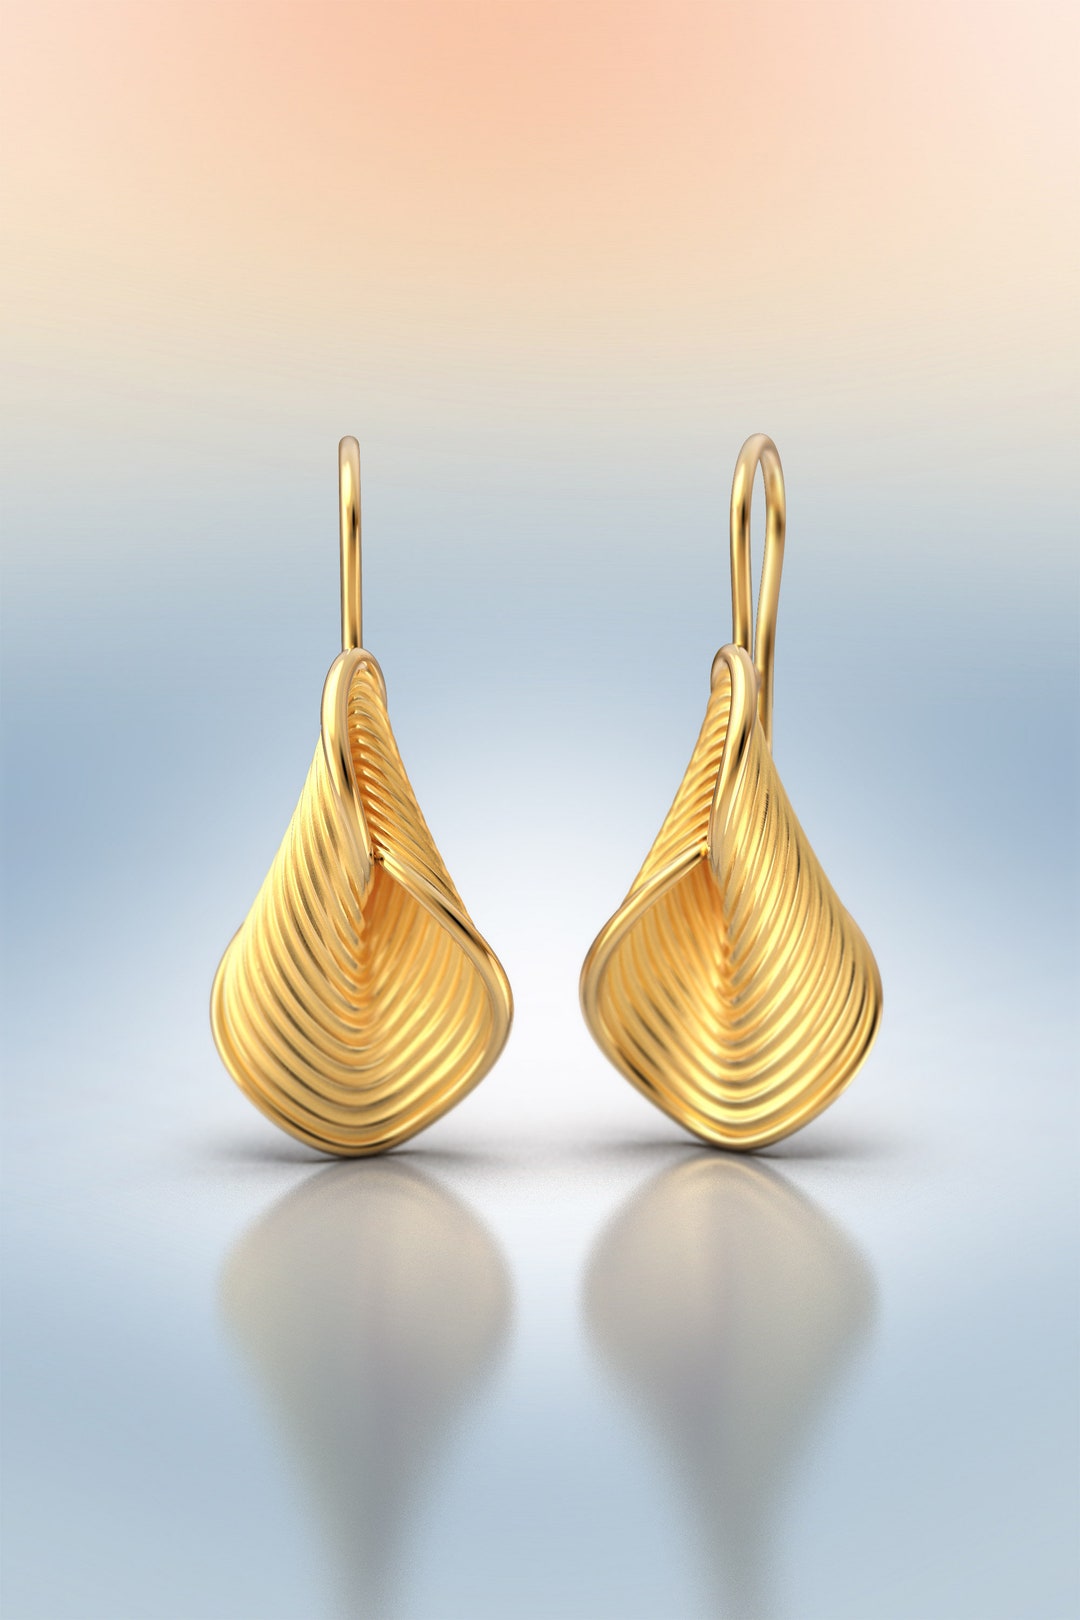 Gold Earrings 14k or 18k , Made in Italy Earrings, Oltremare Gioielli ...